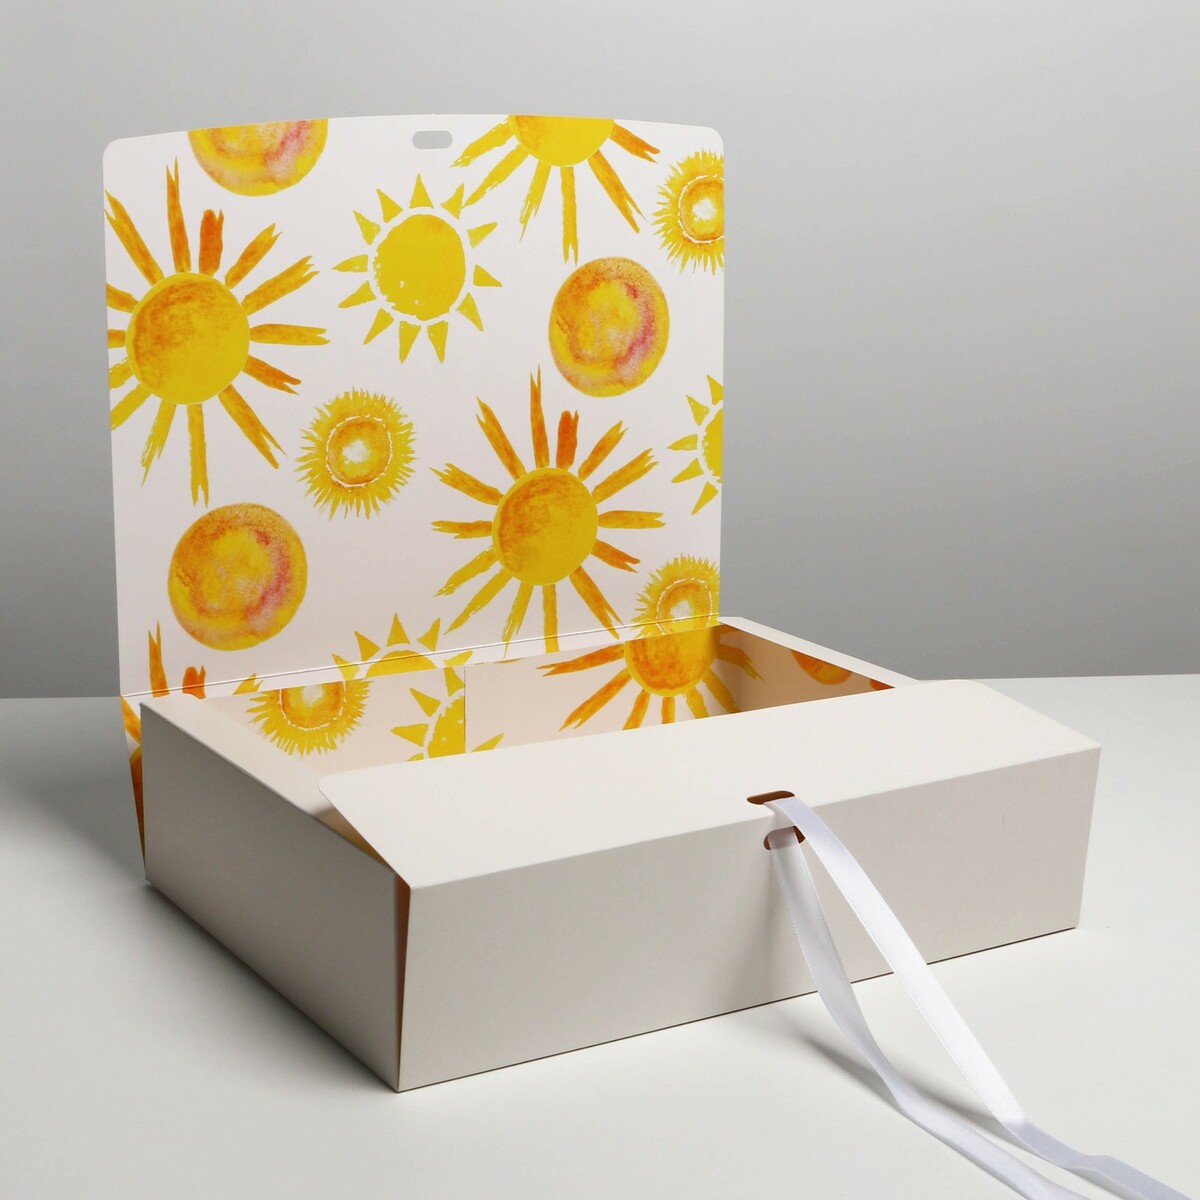 Коробка подарочная складная двухсторонняя, упаковка, коробка подарочная двухсторонняя складная упаковка